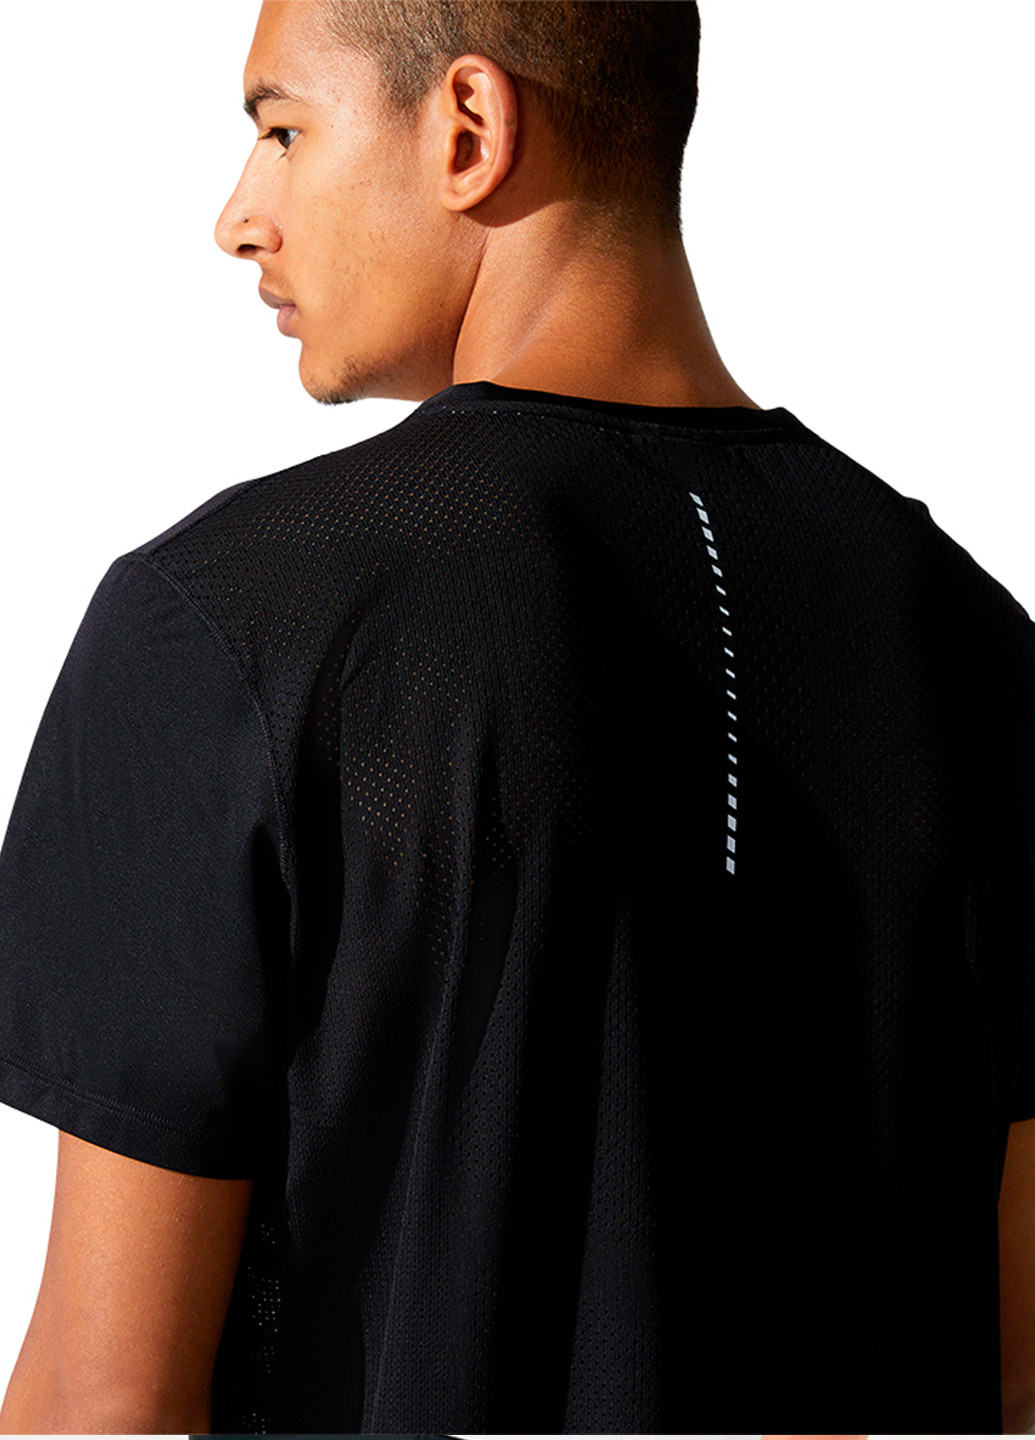 Черная мужская футболка Asics Ventilate